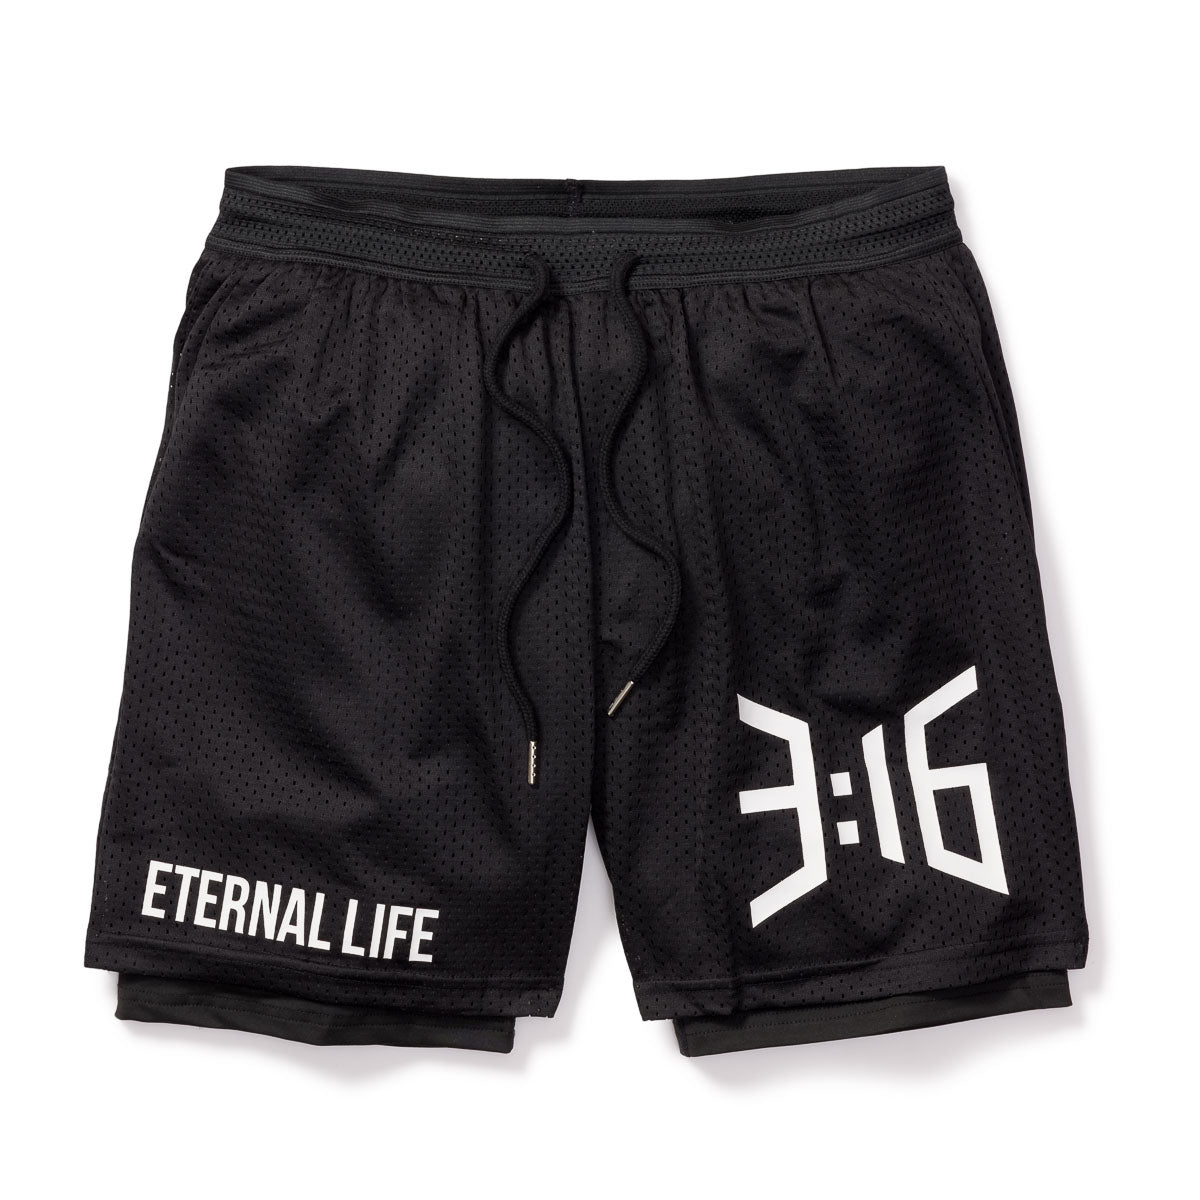 3:16 Eternal Life - Double Layer Athletic Short - Black